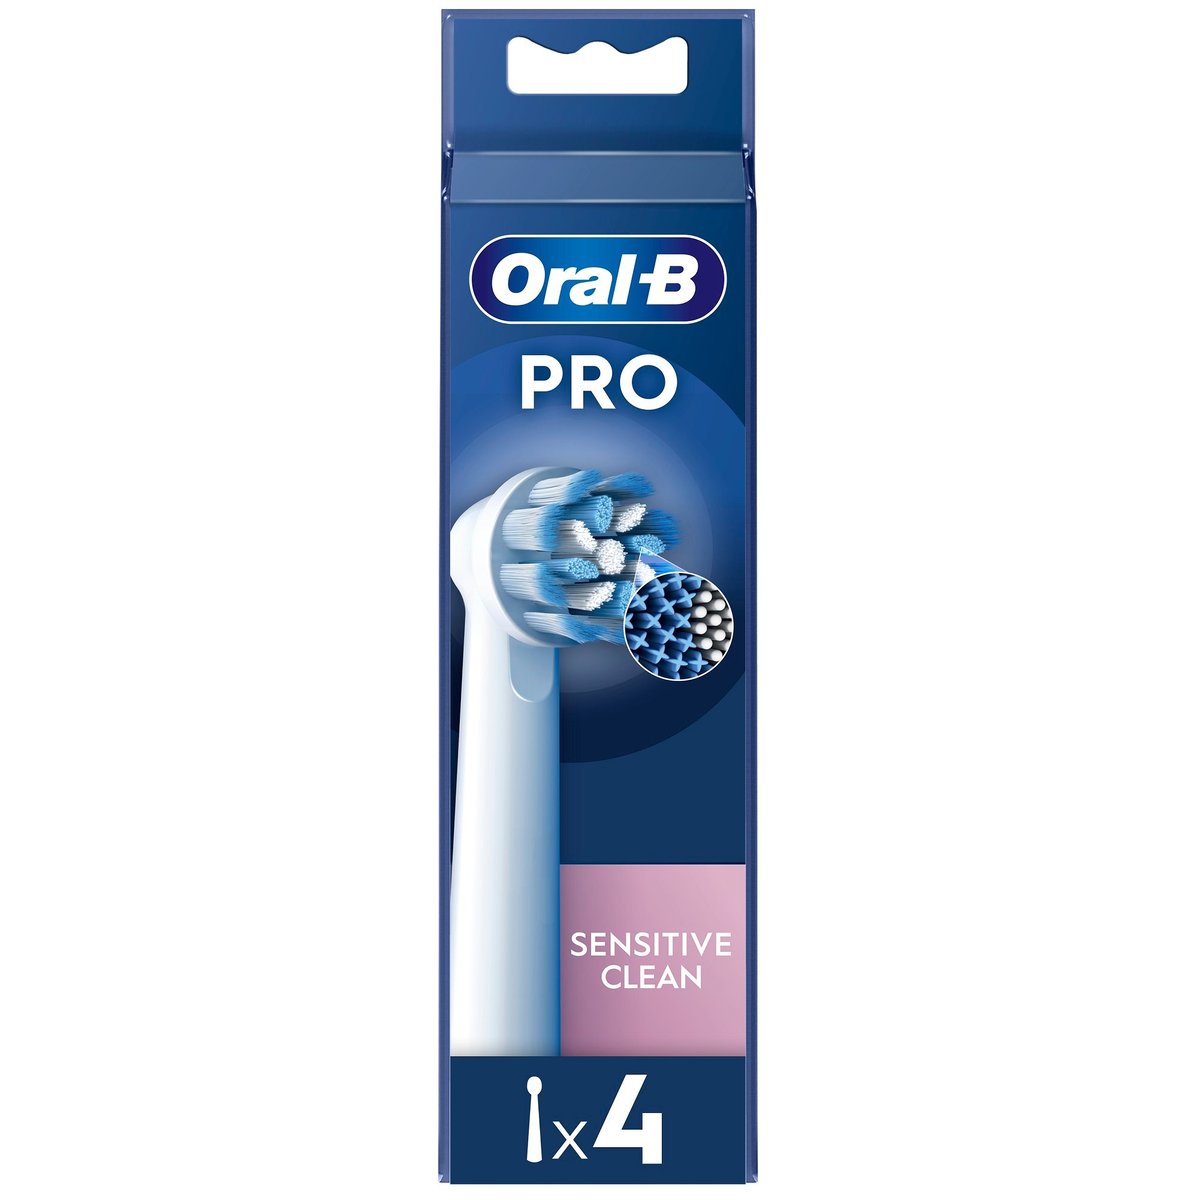 Oral-B Pro Sensitive Clean kartáčkové hlavy